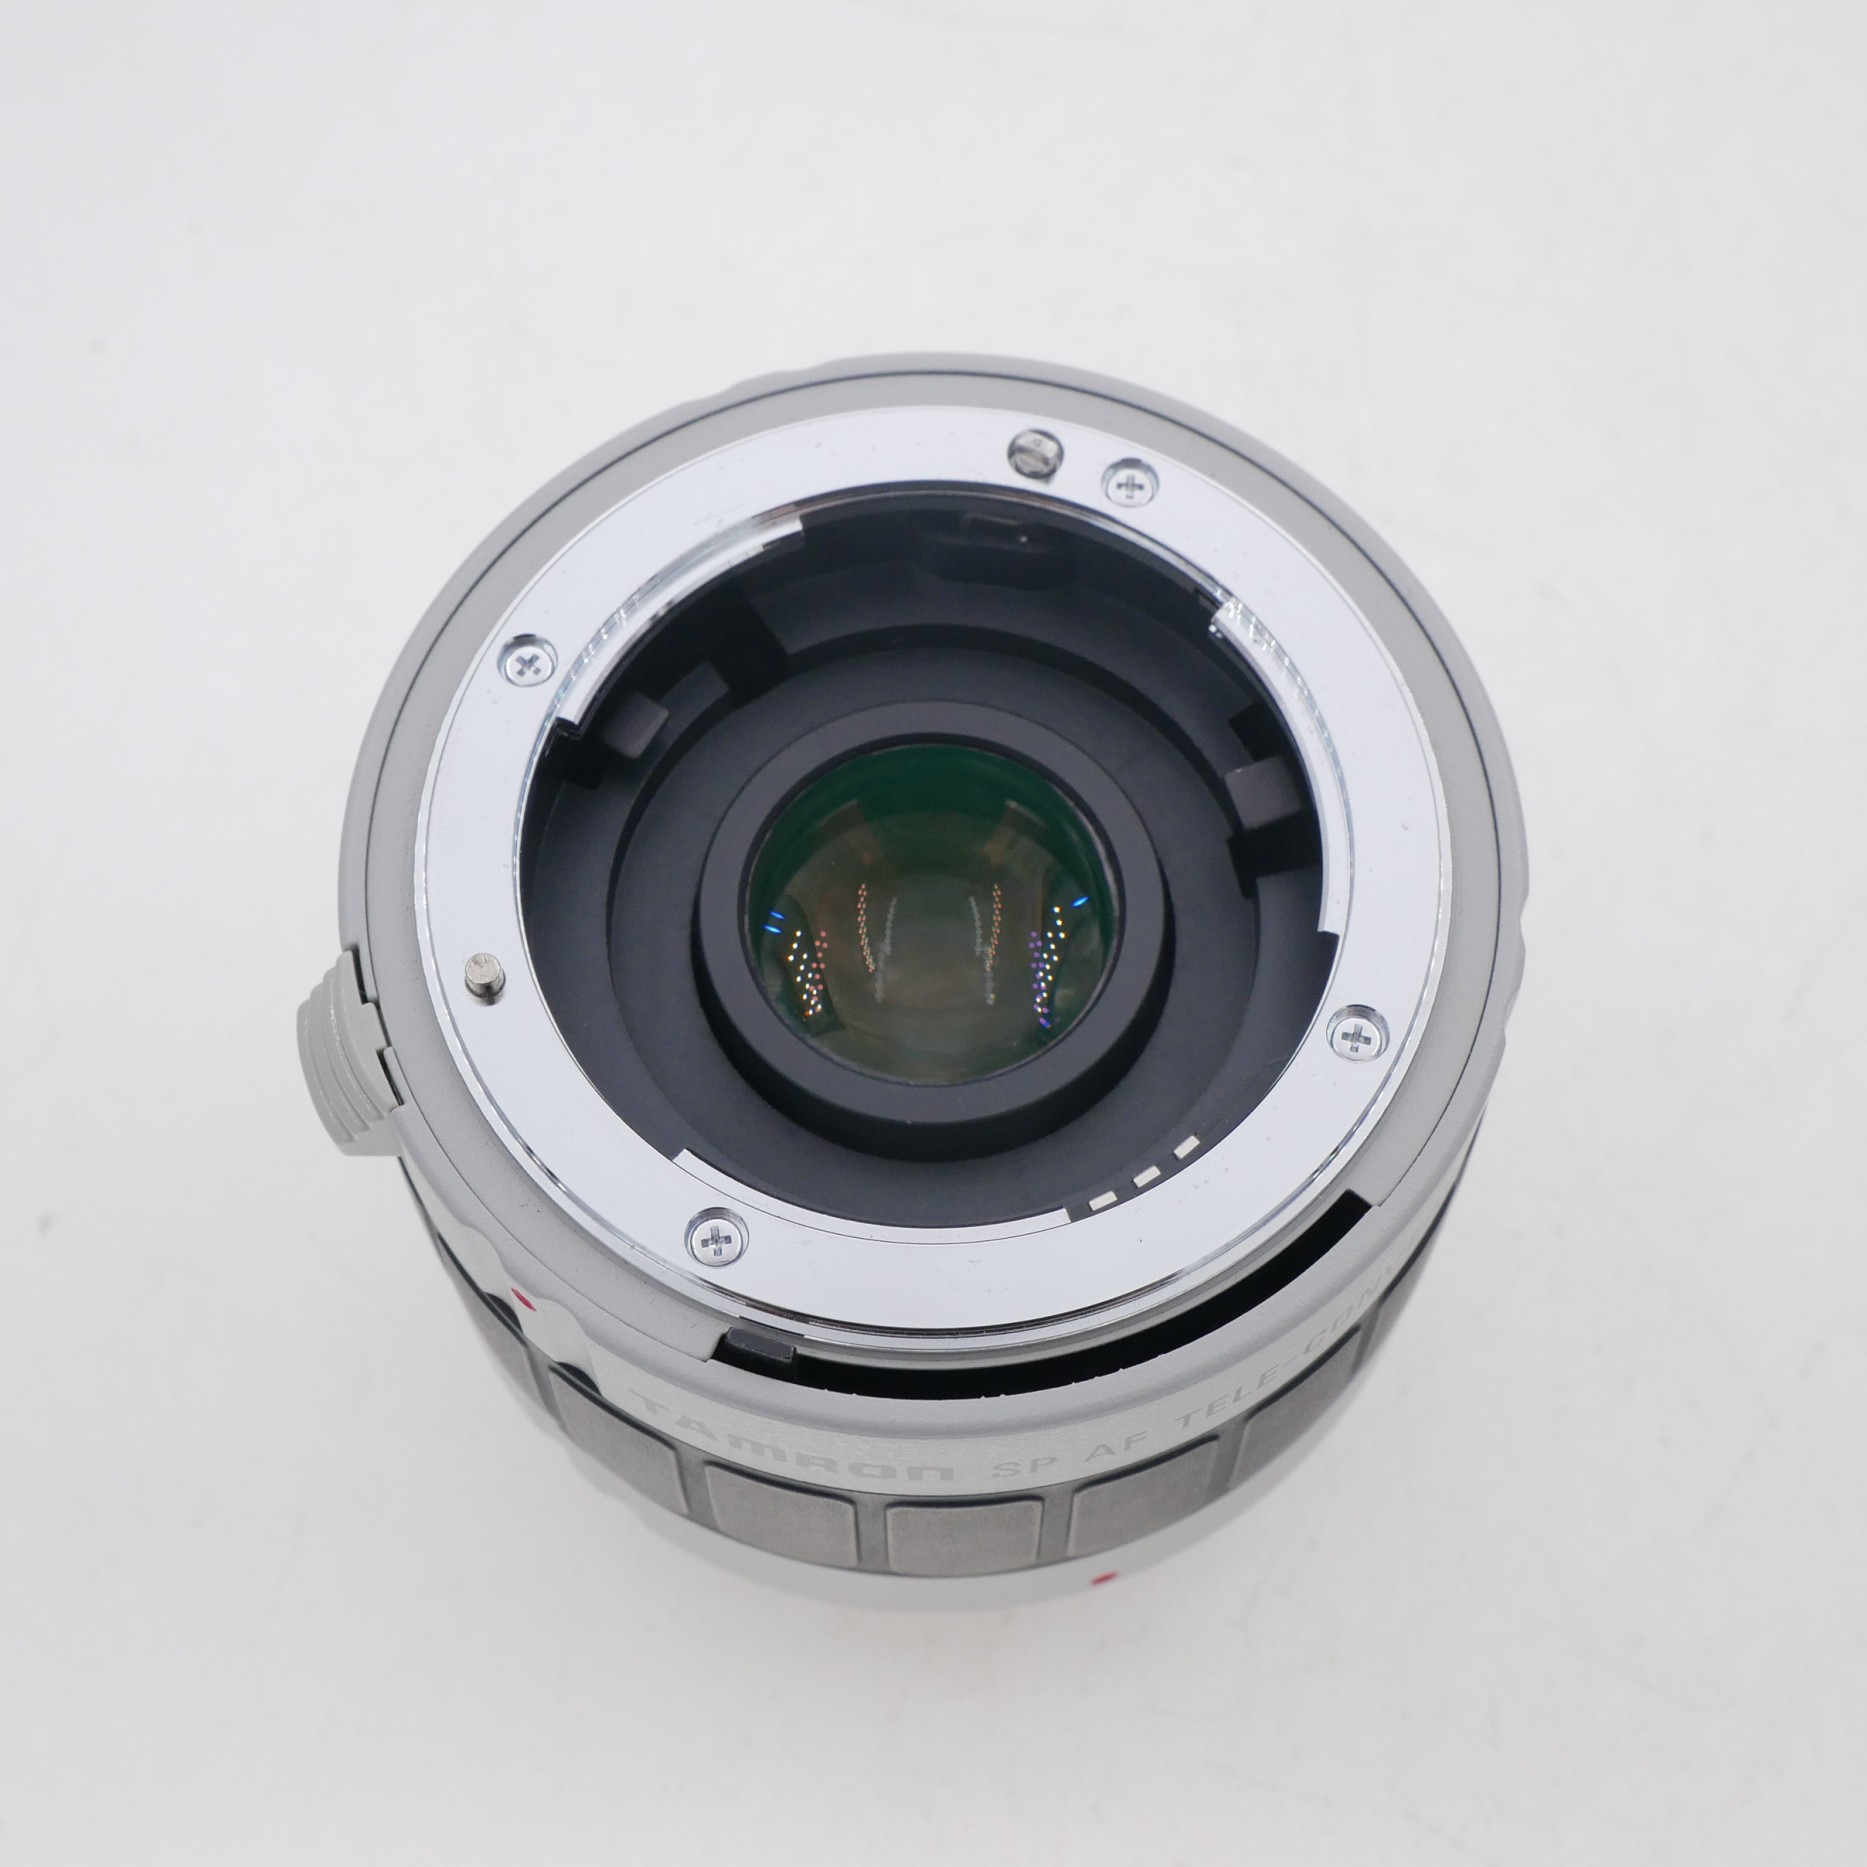 S-H-KXE944_2.jpg - Tamron 2x SP AF Tele-Converter (7E) in Nikon Mount